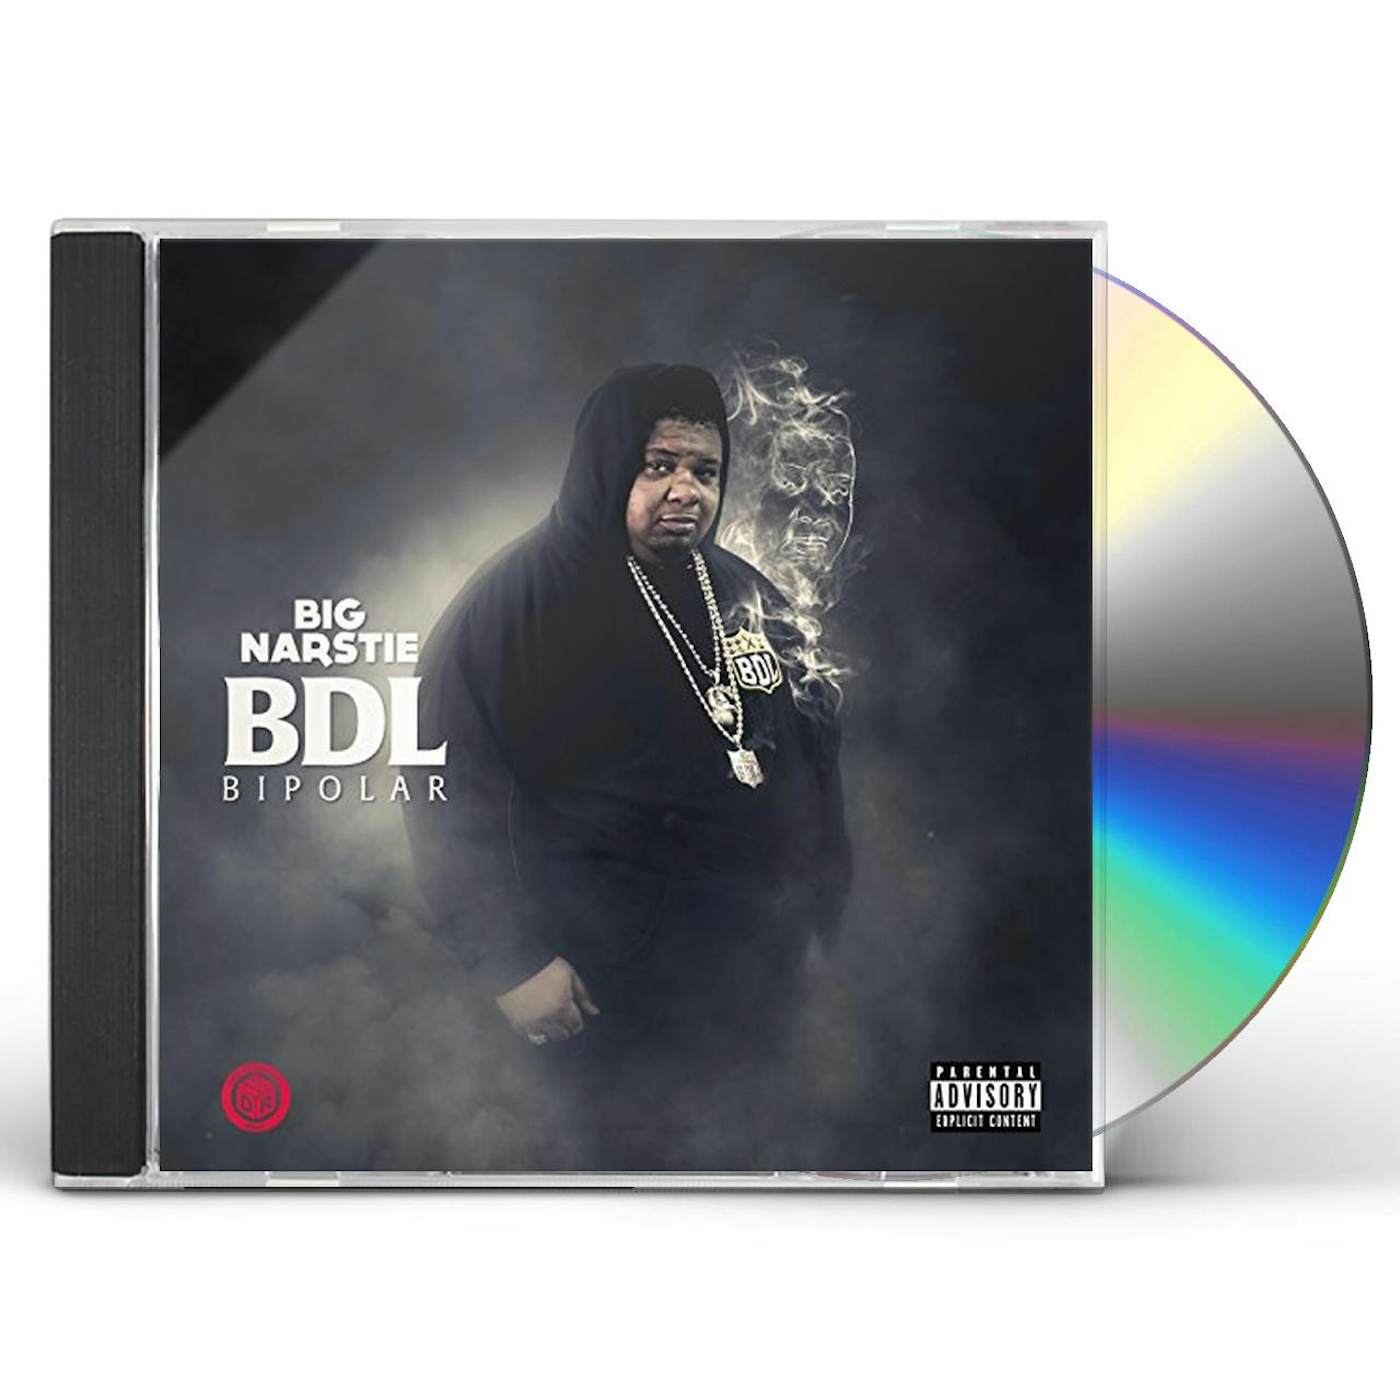 Big Narstie BDL BIPOLAR CD